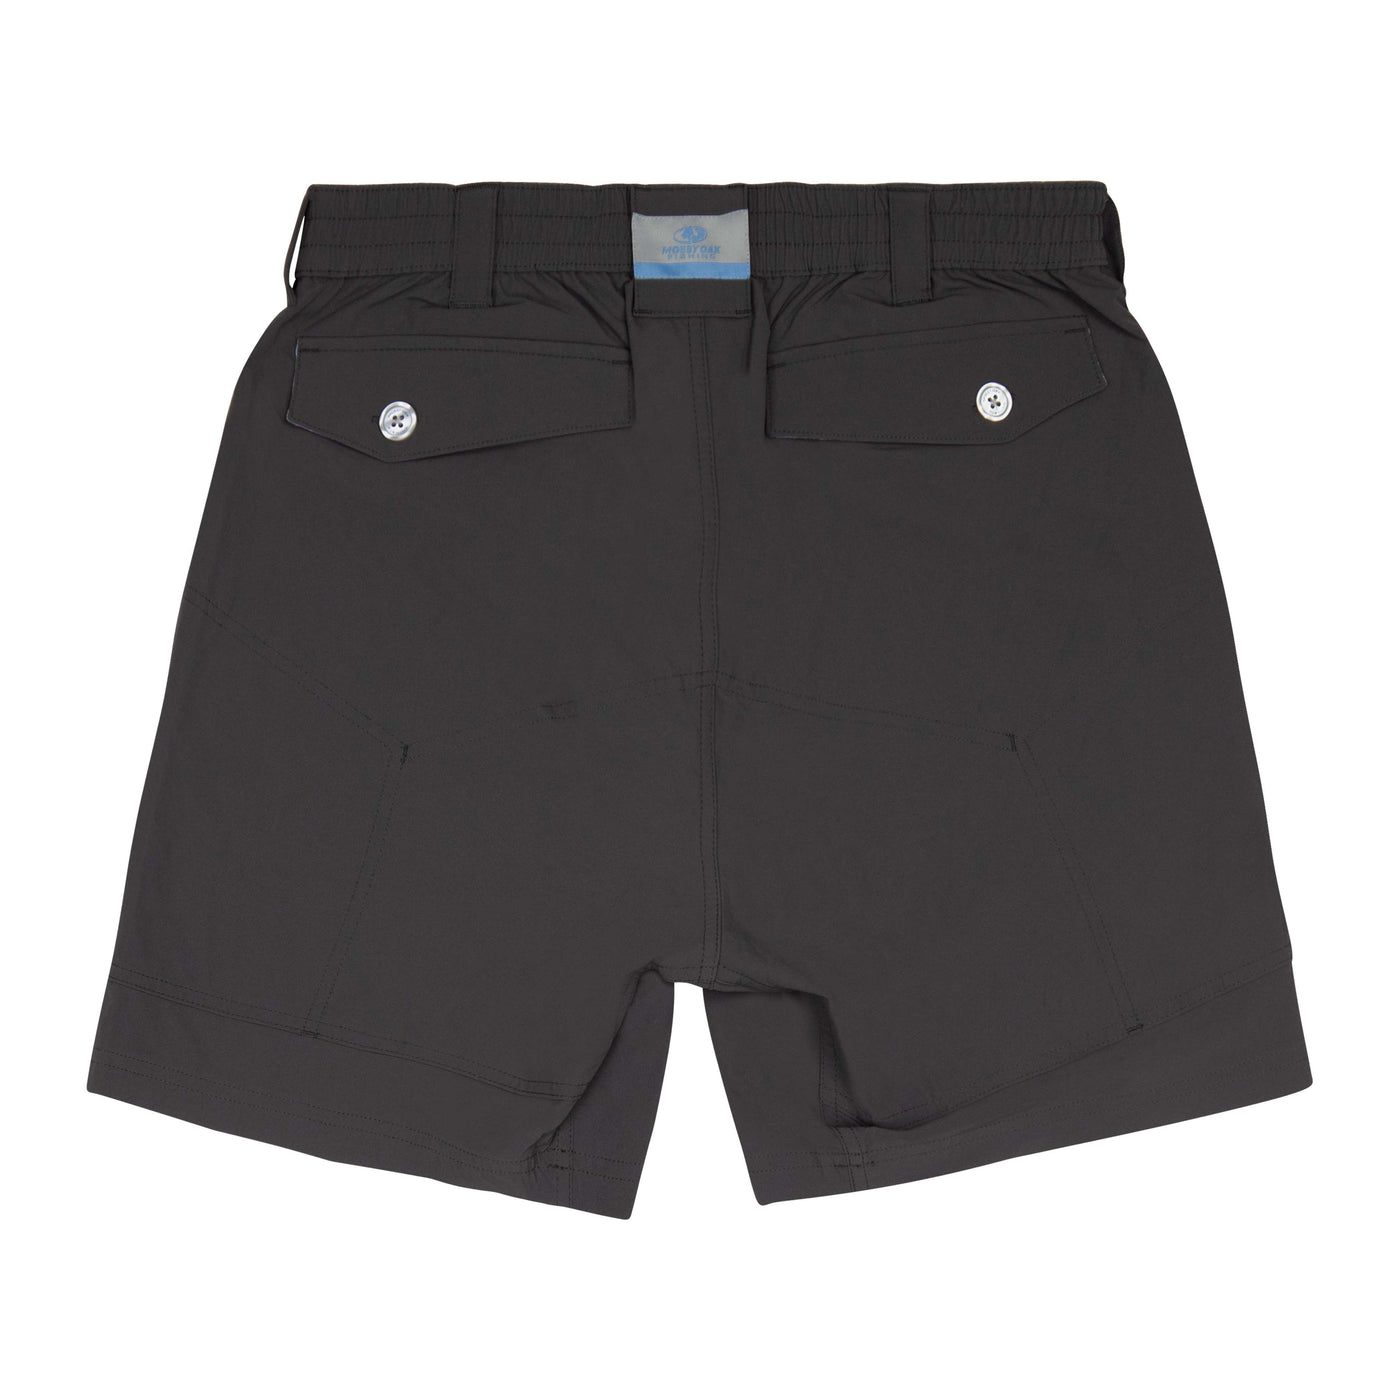 Mossy Oak Polyester Shorts for Men